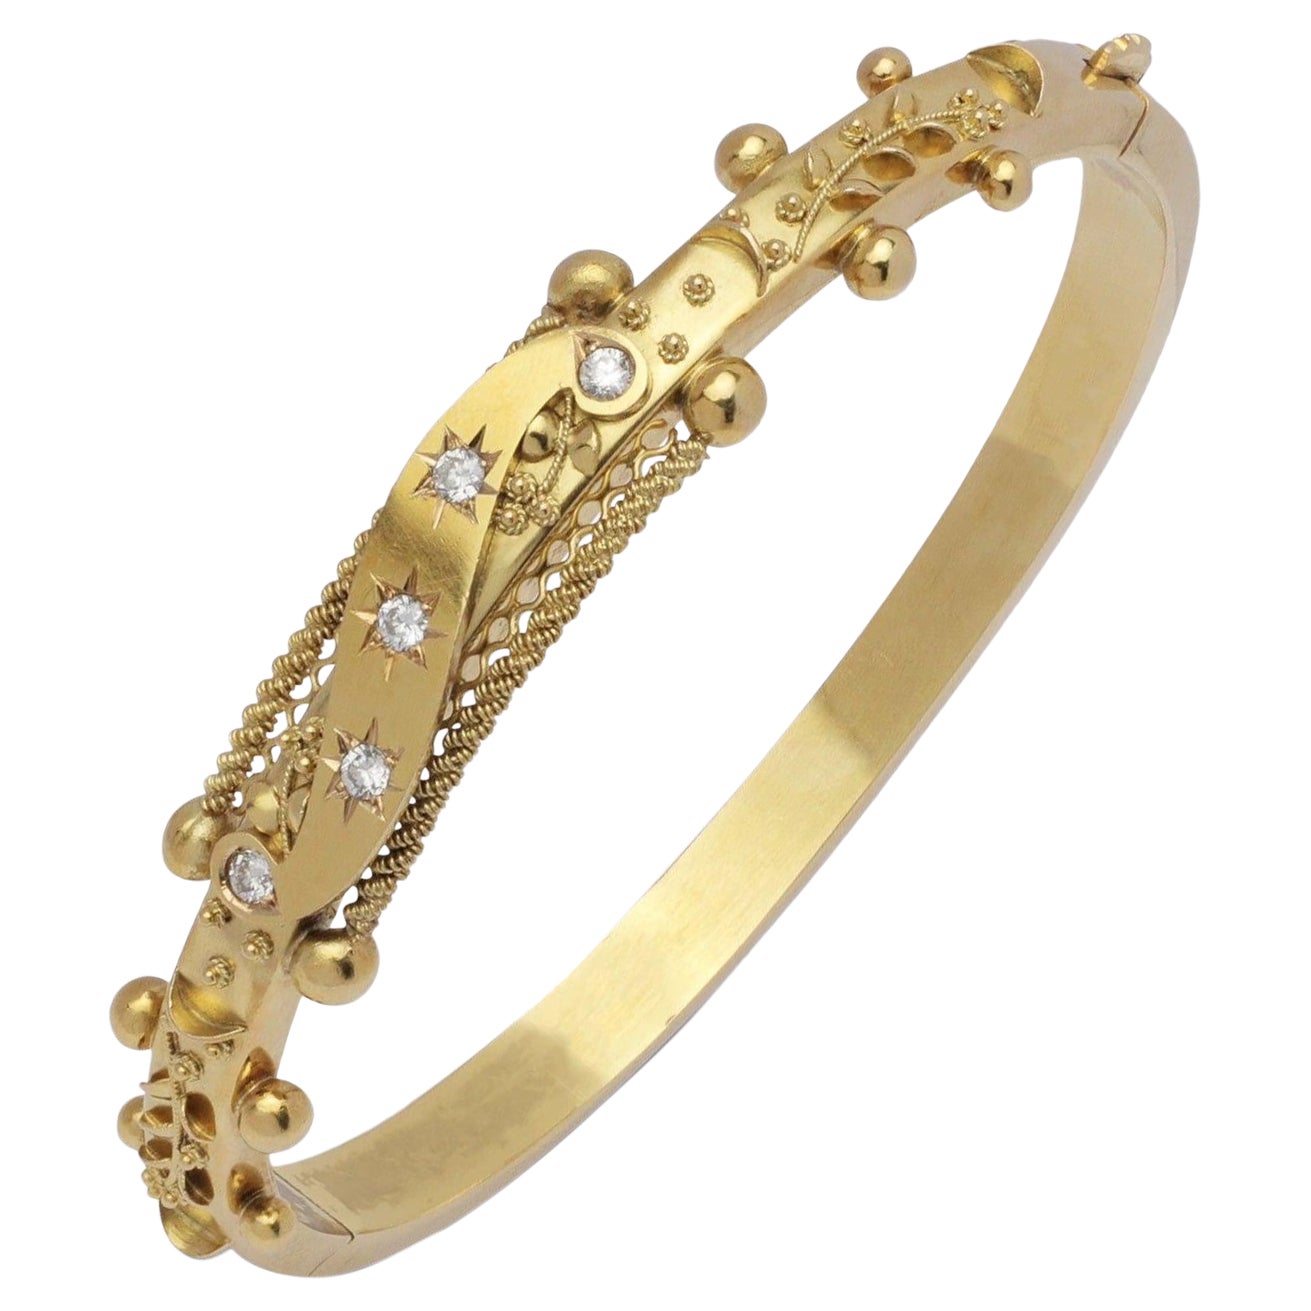 19th Century, 18 Karat Yellow Gold & Diamond Bangle